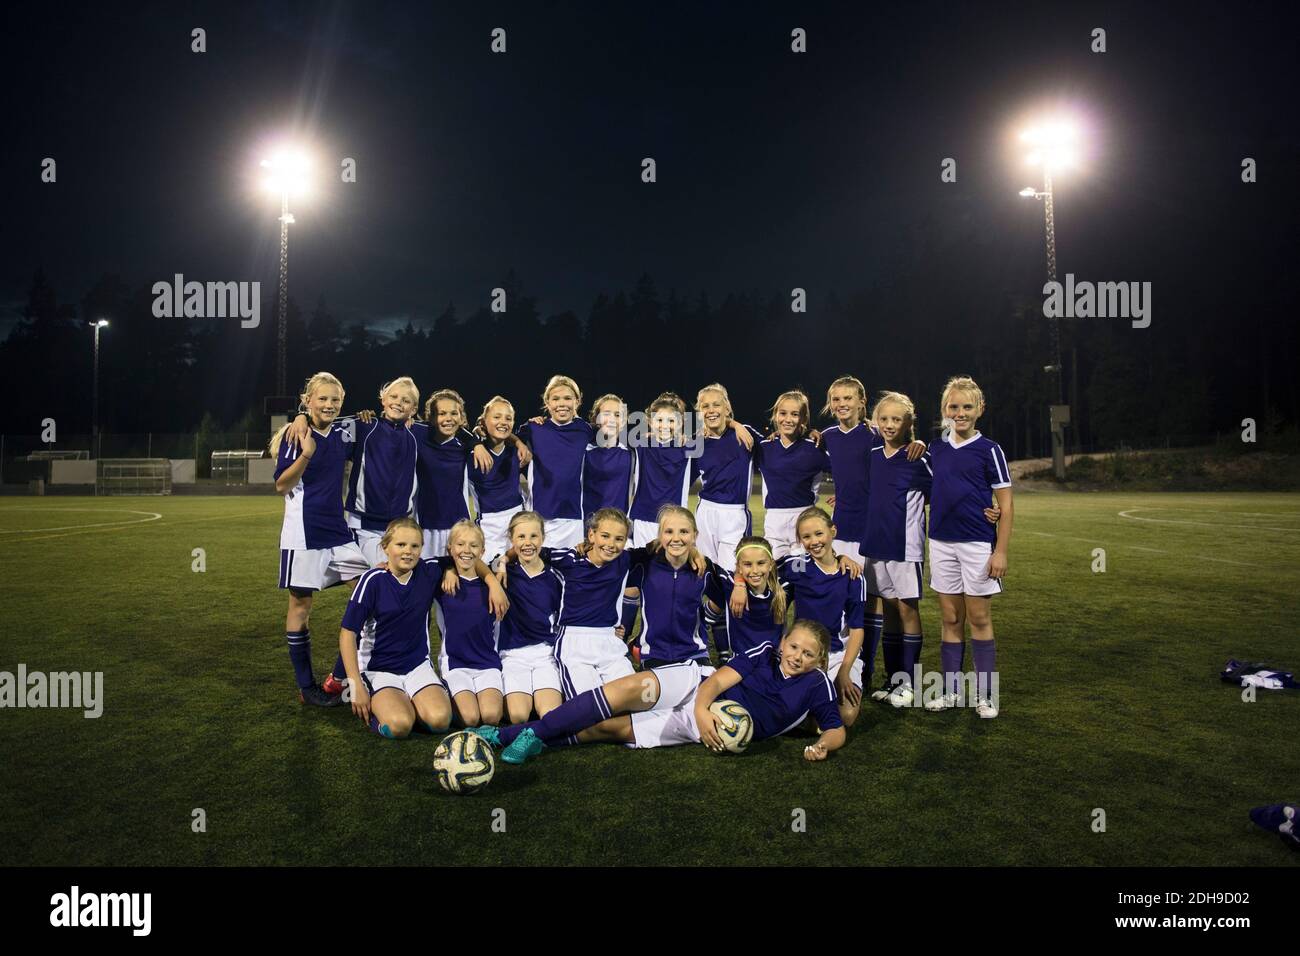 Porträt der Mädchen Fußballmannschaft auf beleuchteten Feld gegen Himmel Stockfoto